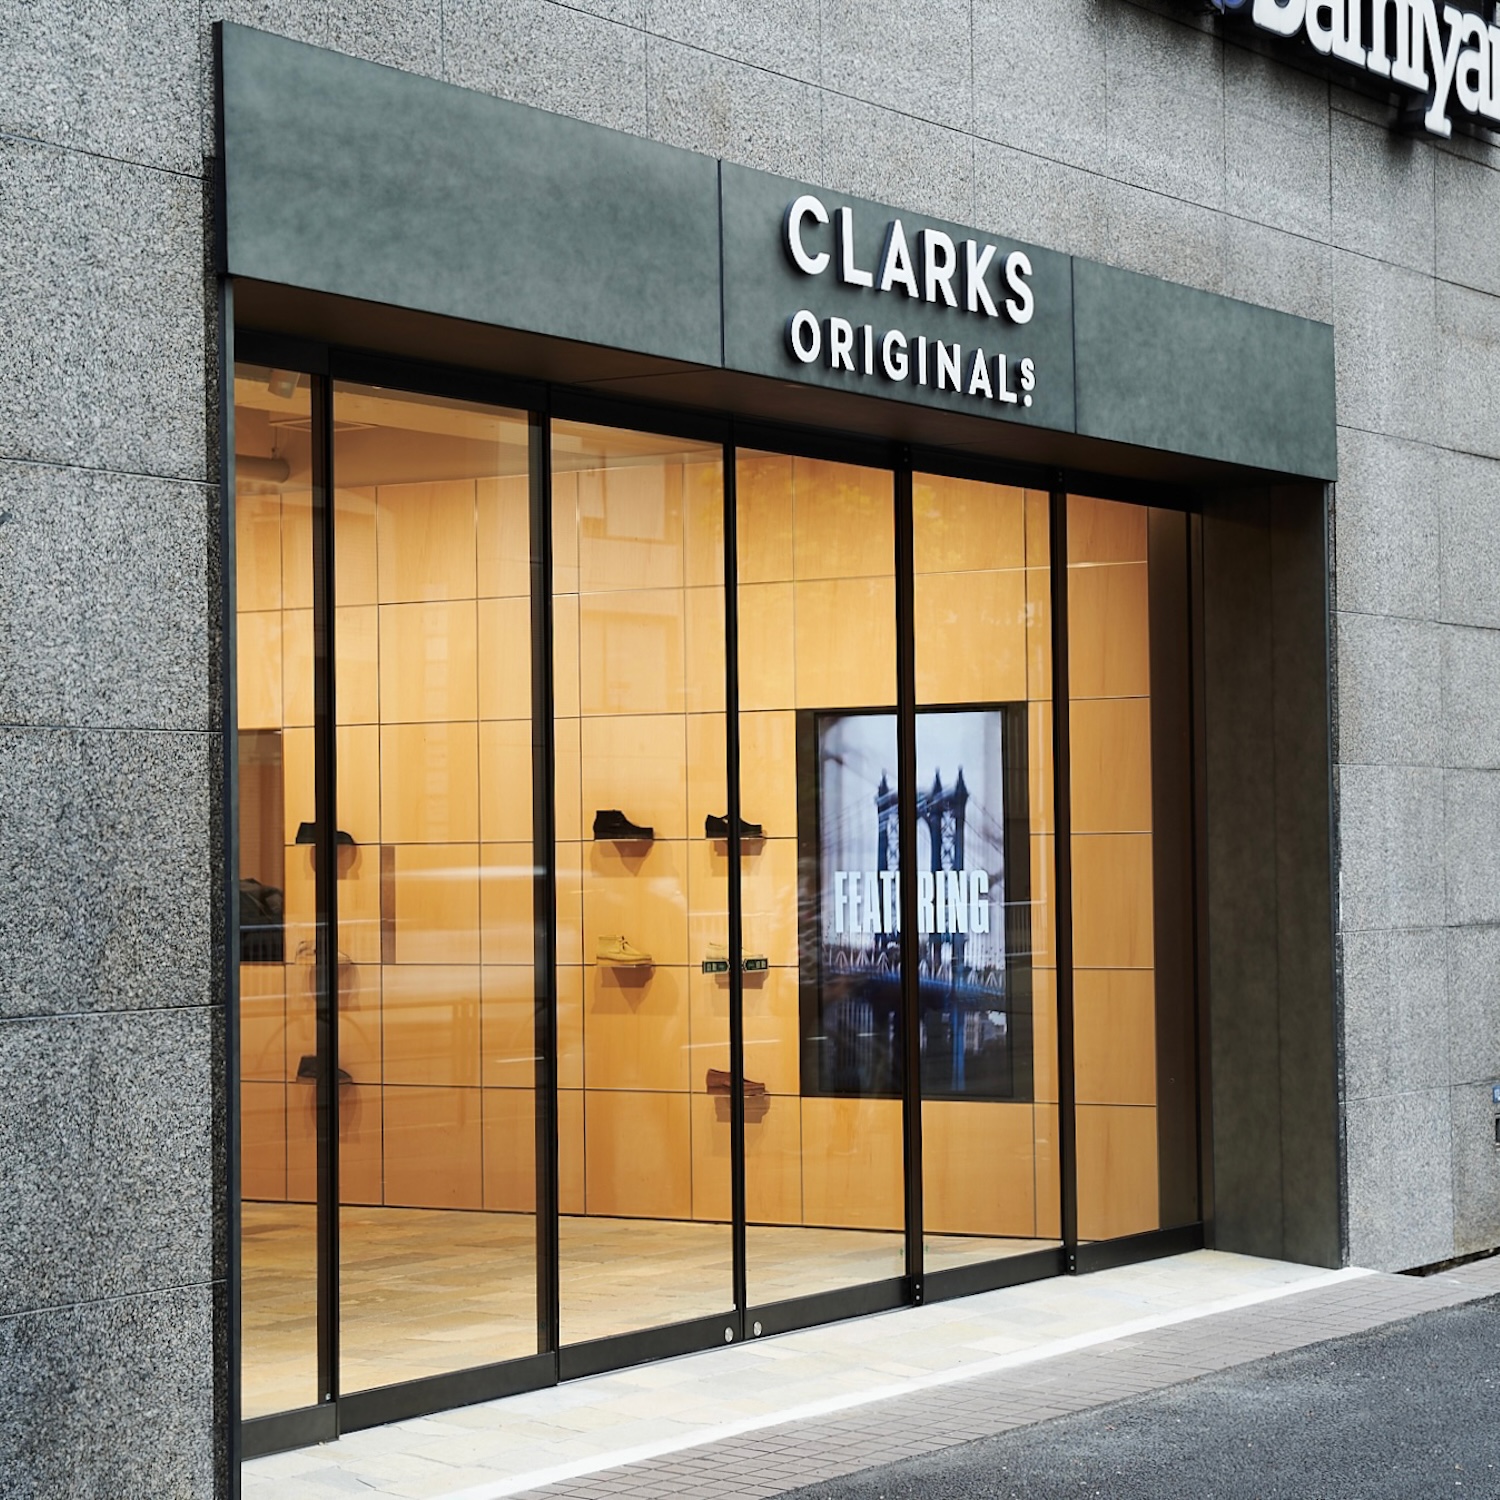 Clarks Jobs - Careers Website - Tokyo - Office Image 1.jpeg